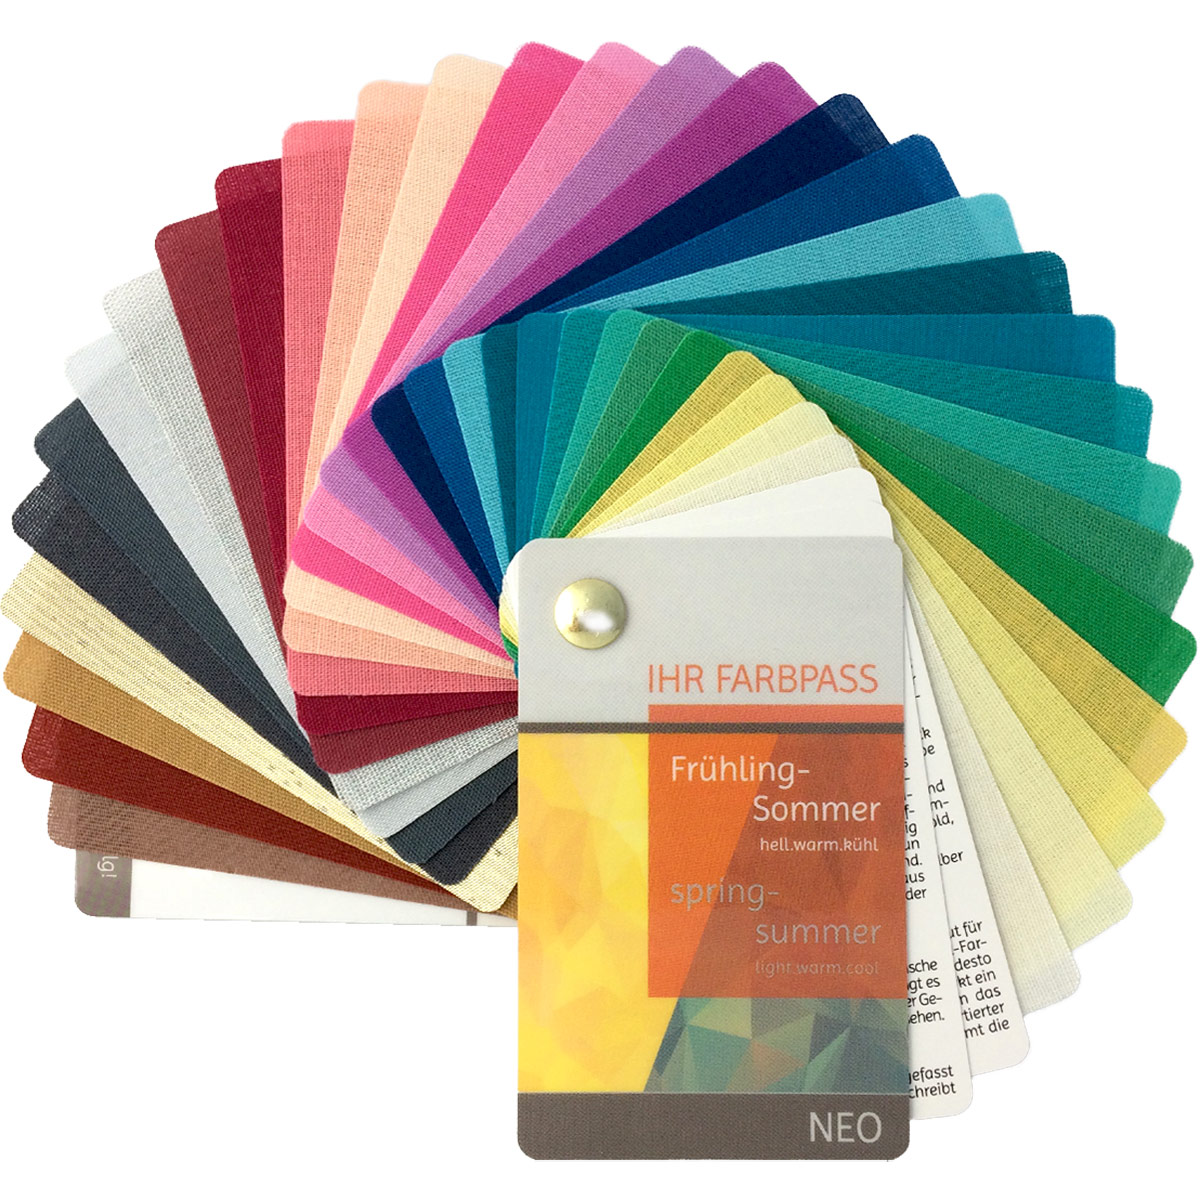 Farbpass Frühling-Sommer - Neo, 30 Farben